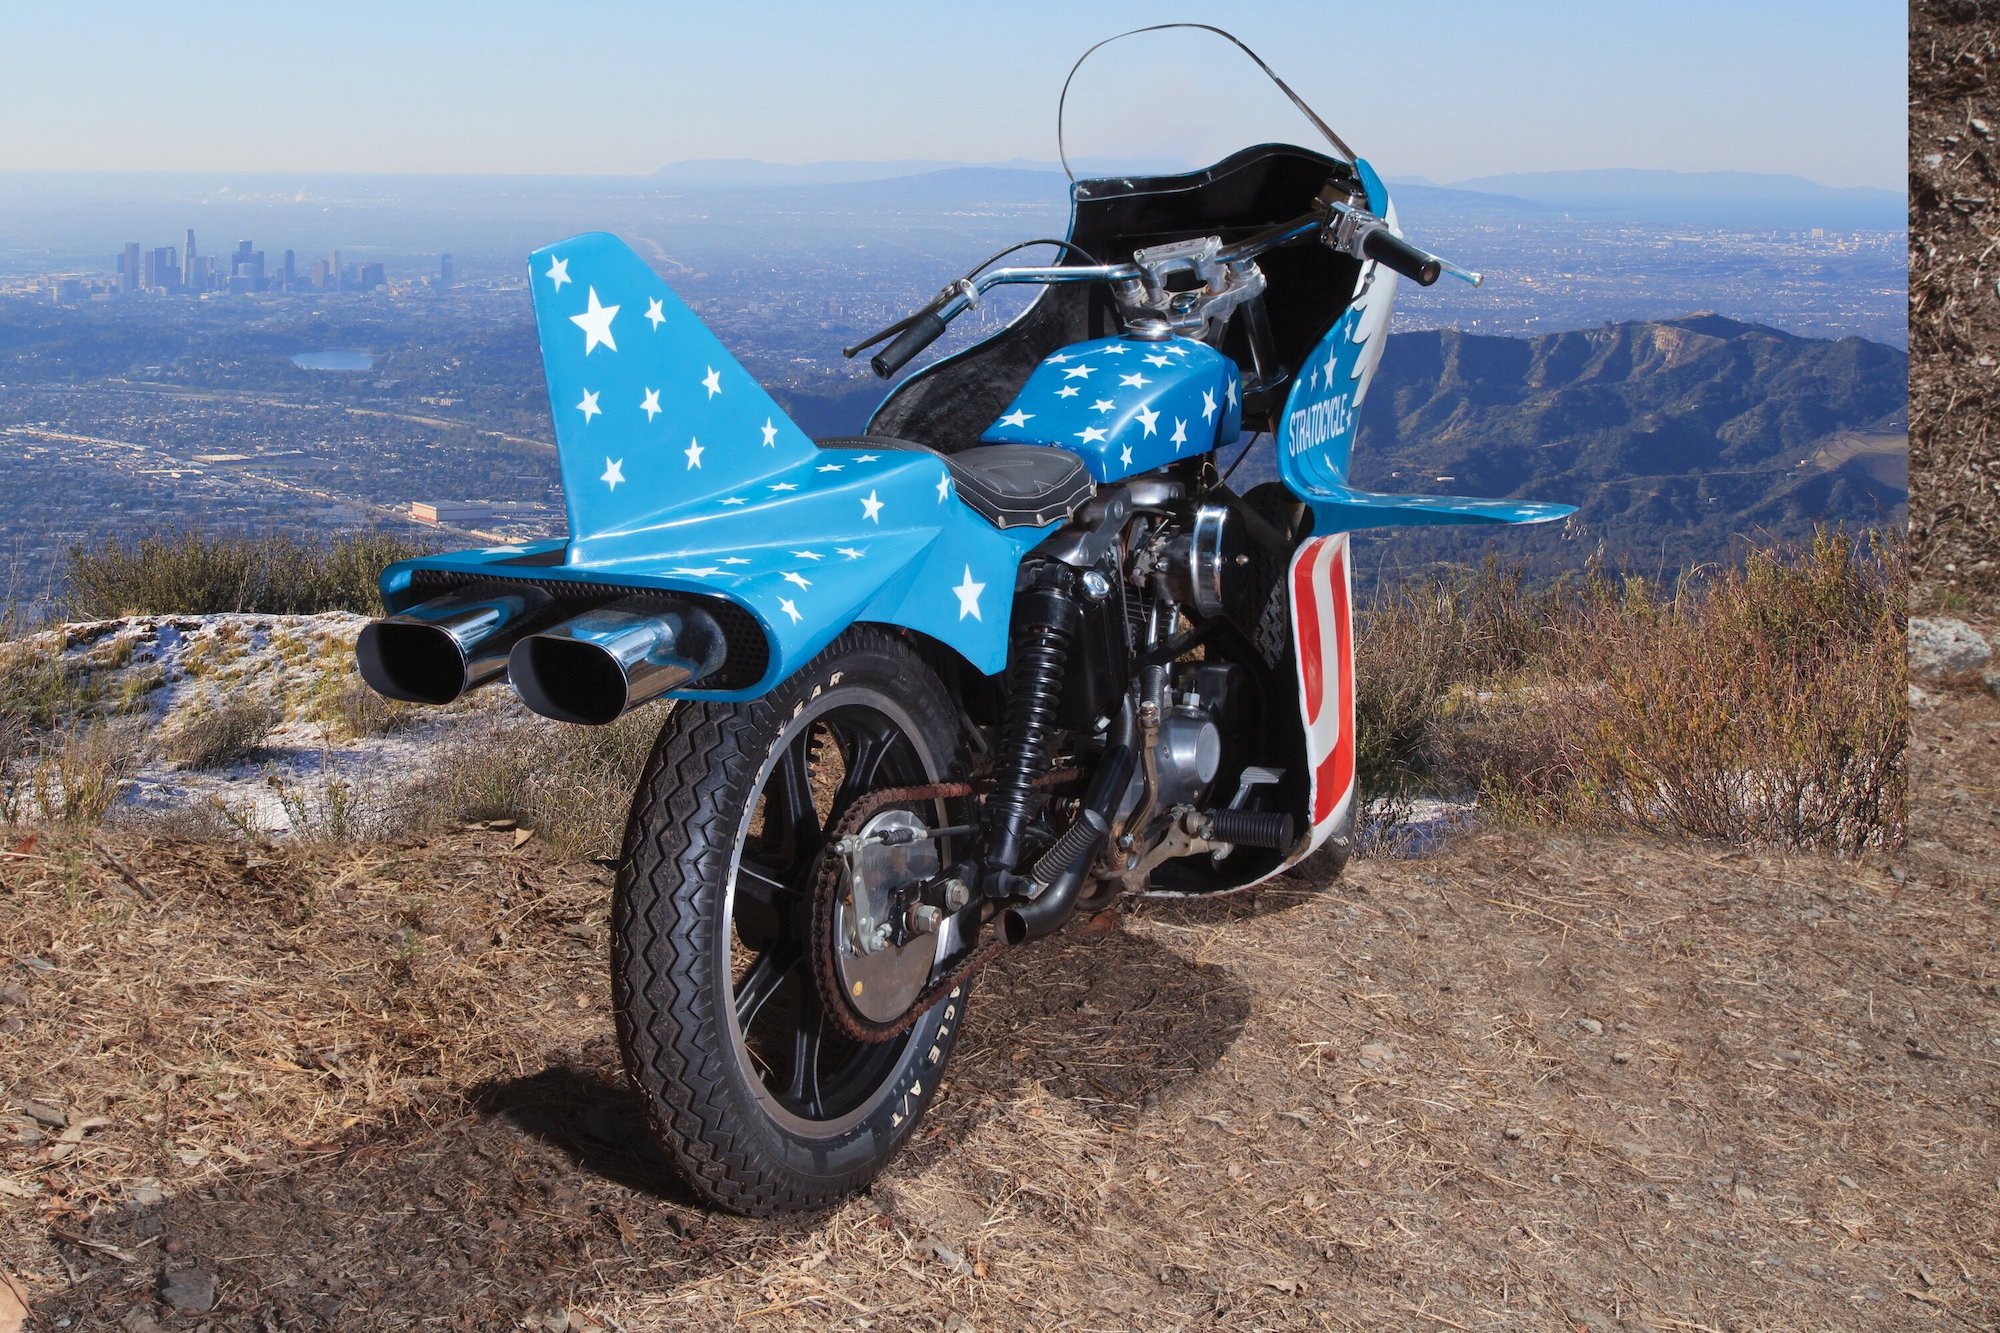 Evel Knievel Harley Davidson Stratocycle